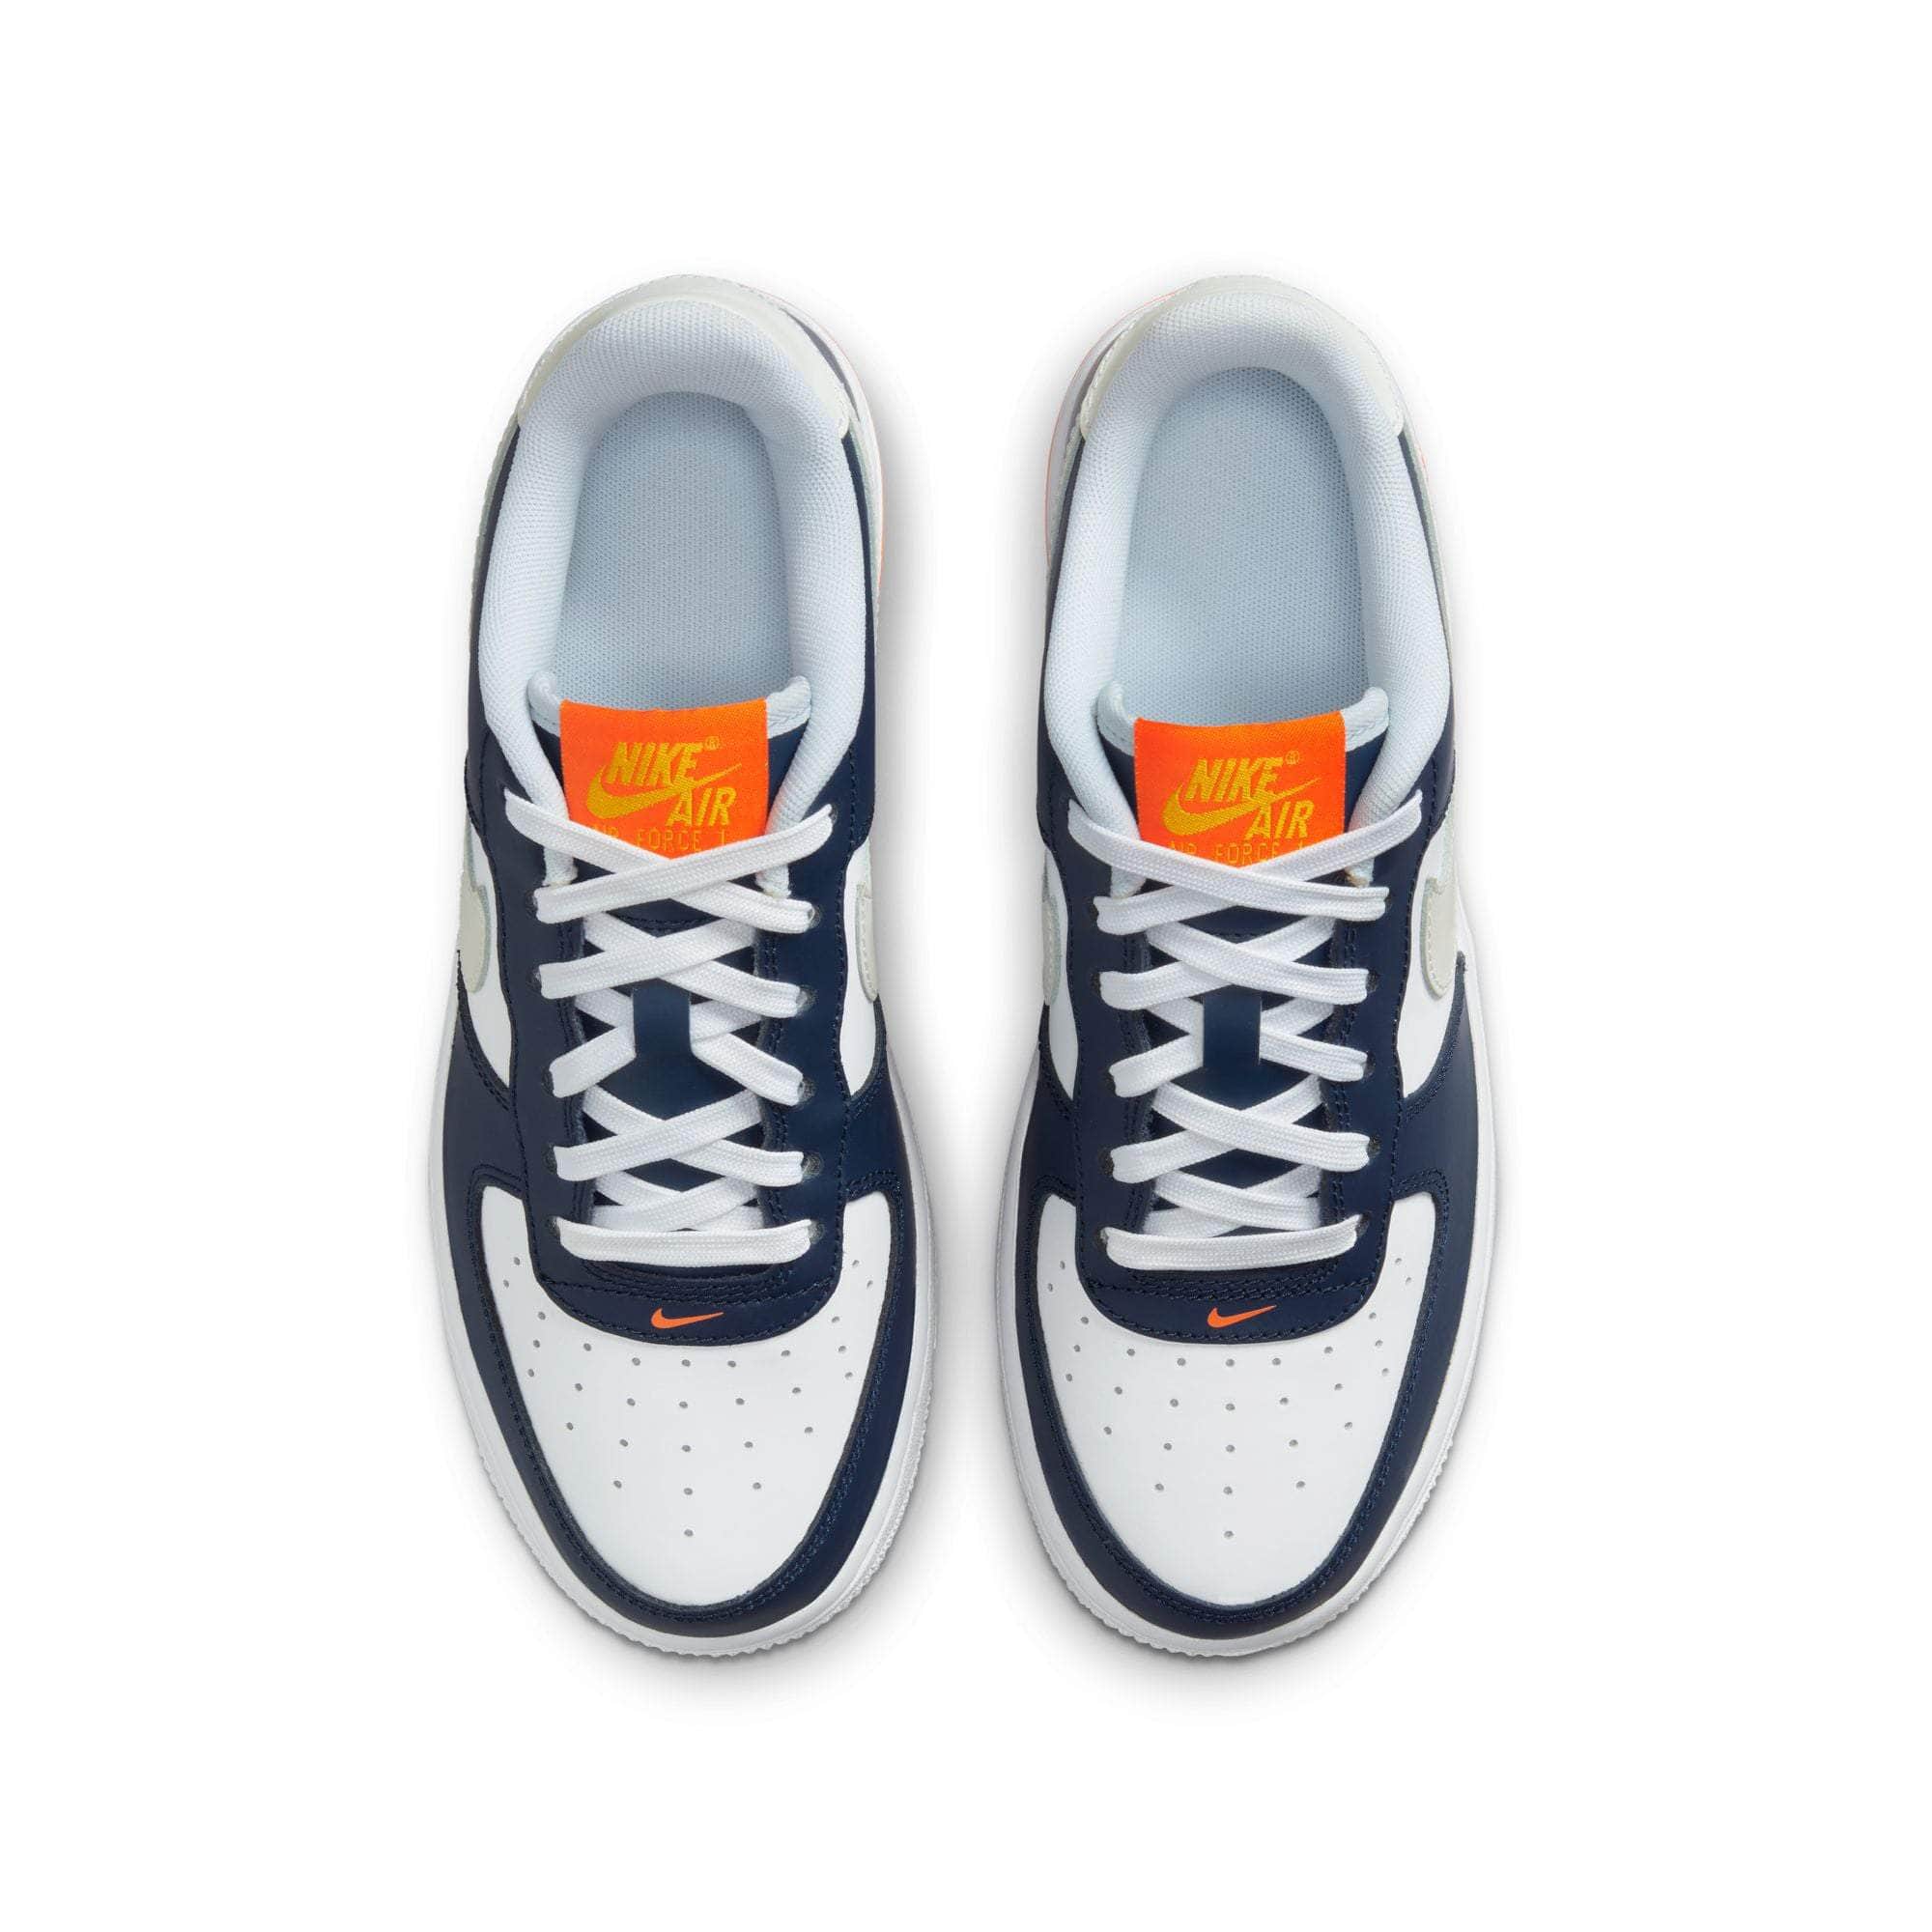 Colour changing Nike Air Jordan cut low UV Men's Shoes